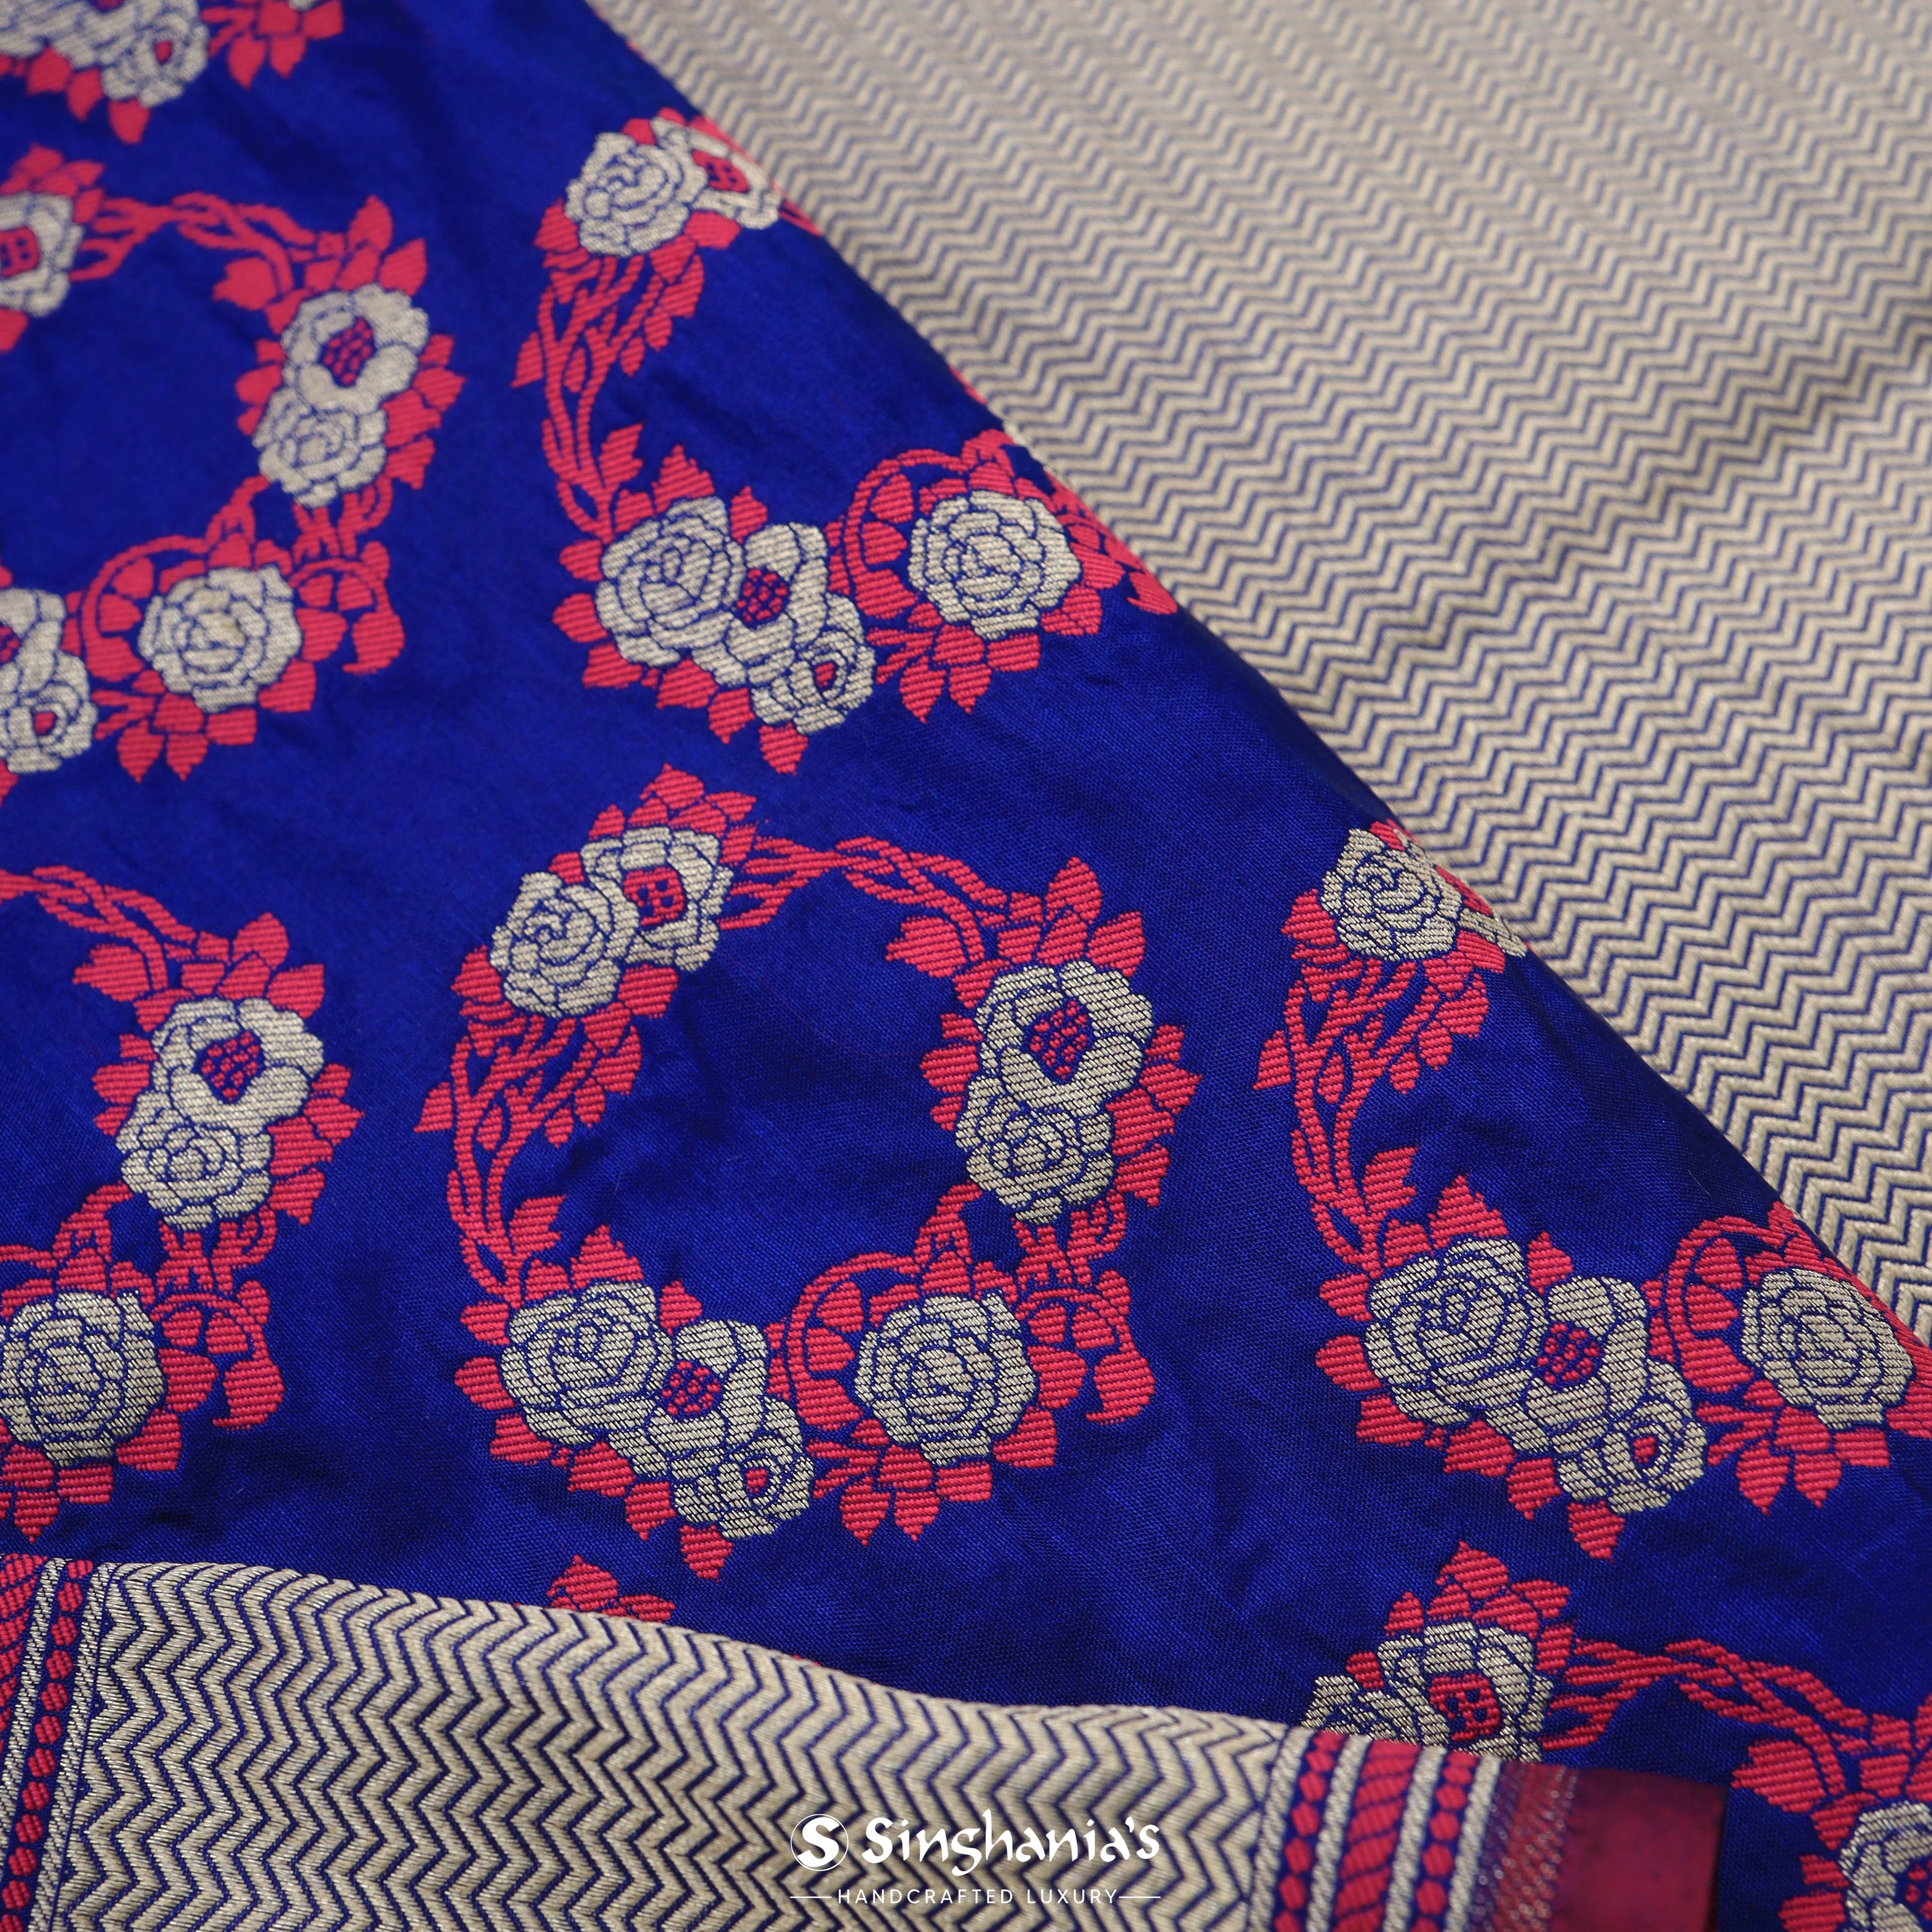 Ultramarine Blue Banarasi Silk Saree With Floral Wreath Motifs